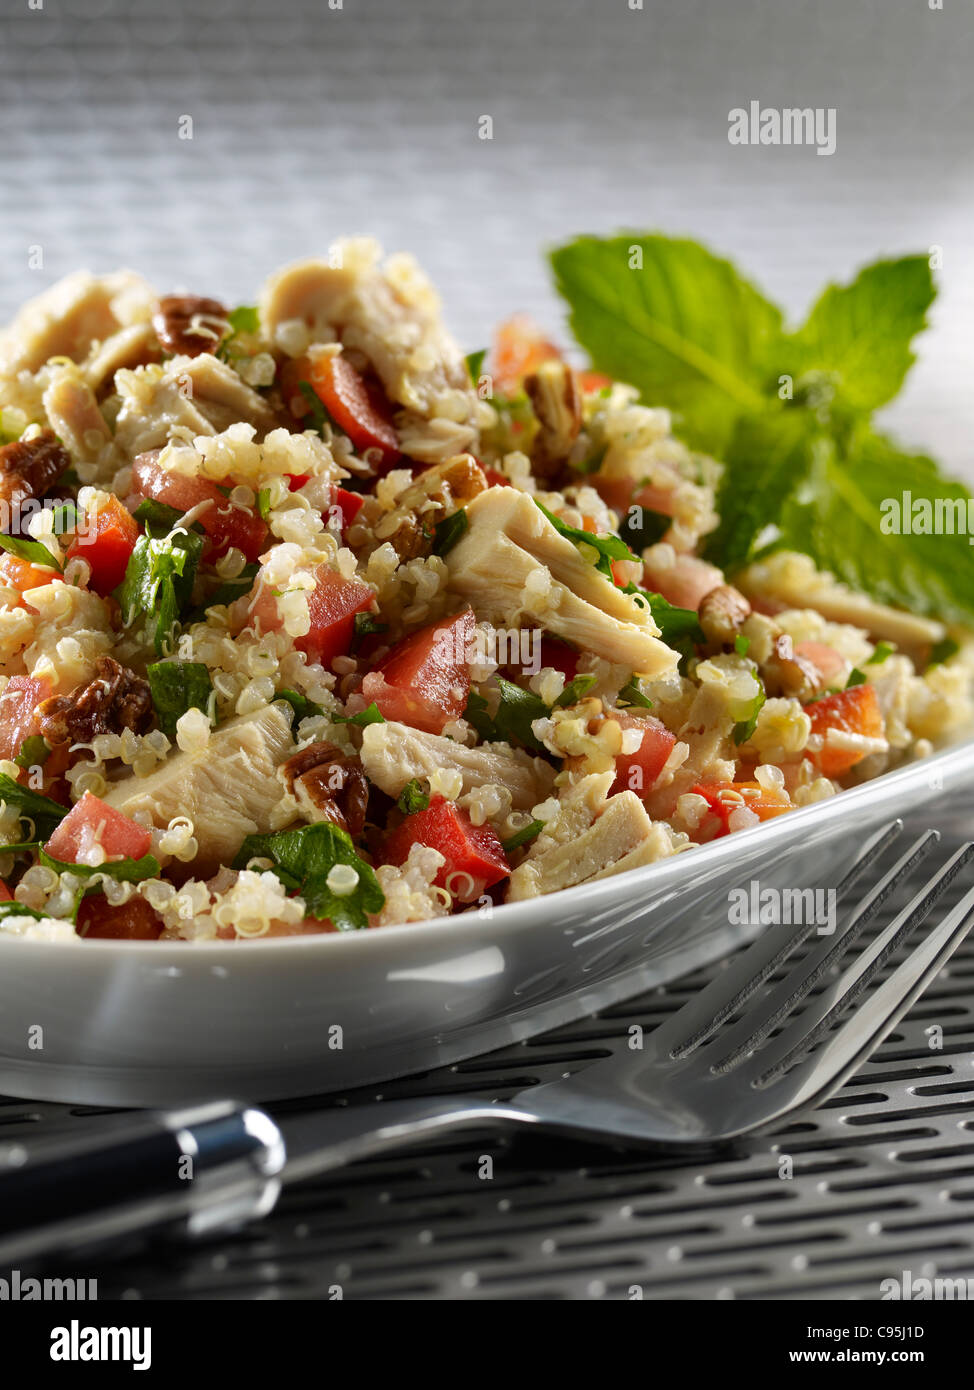 Tuna quinoa salad with tomato, onion, greens and nuts Stock Photo